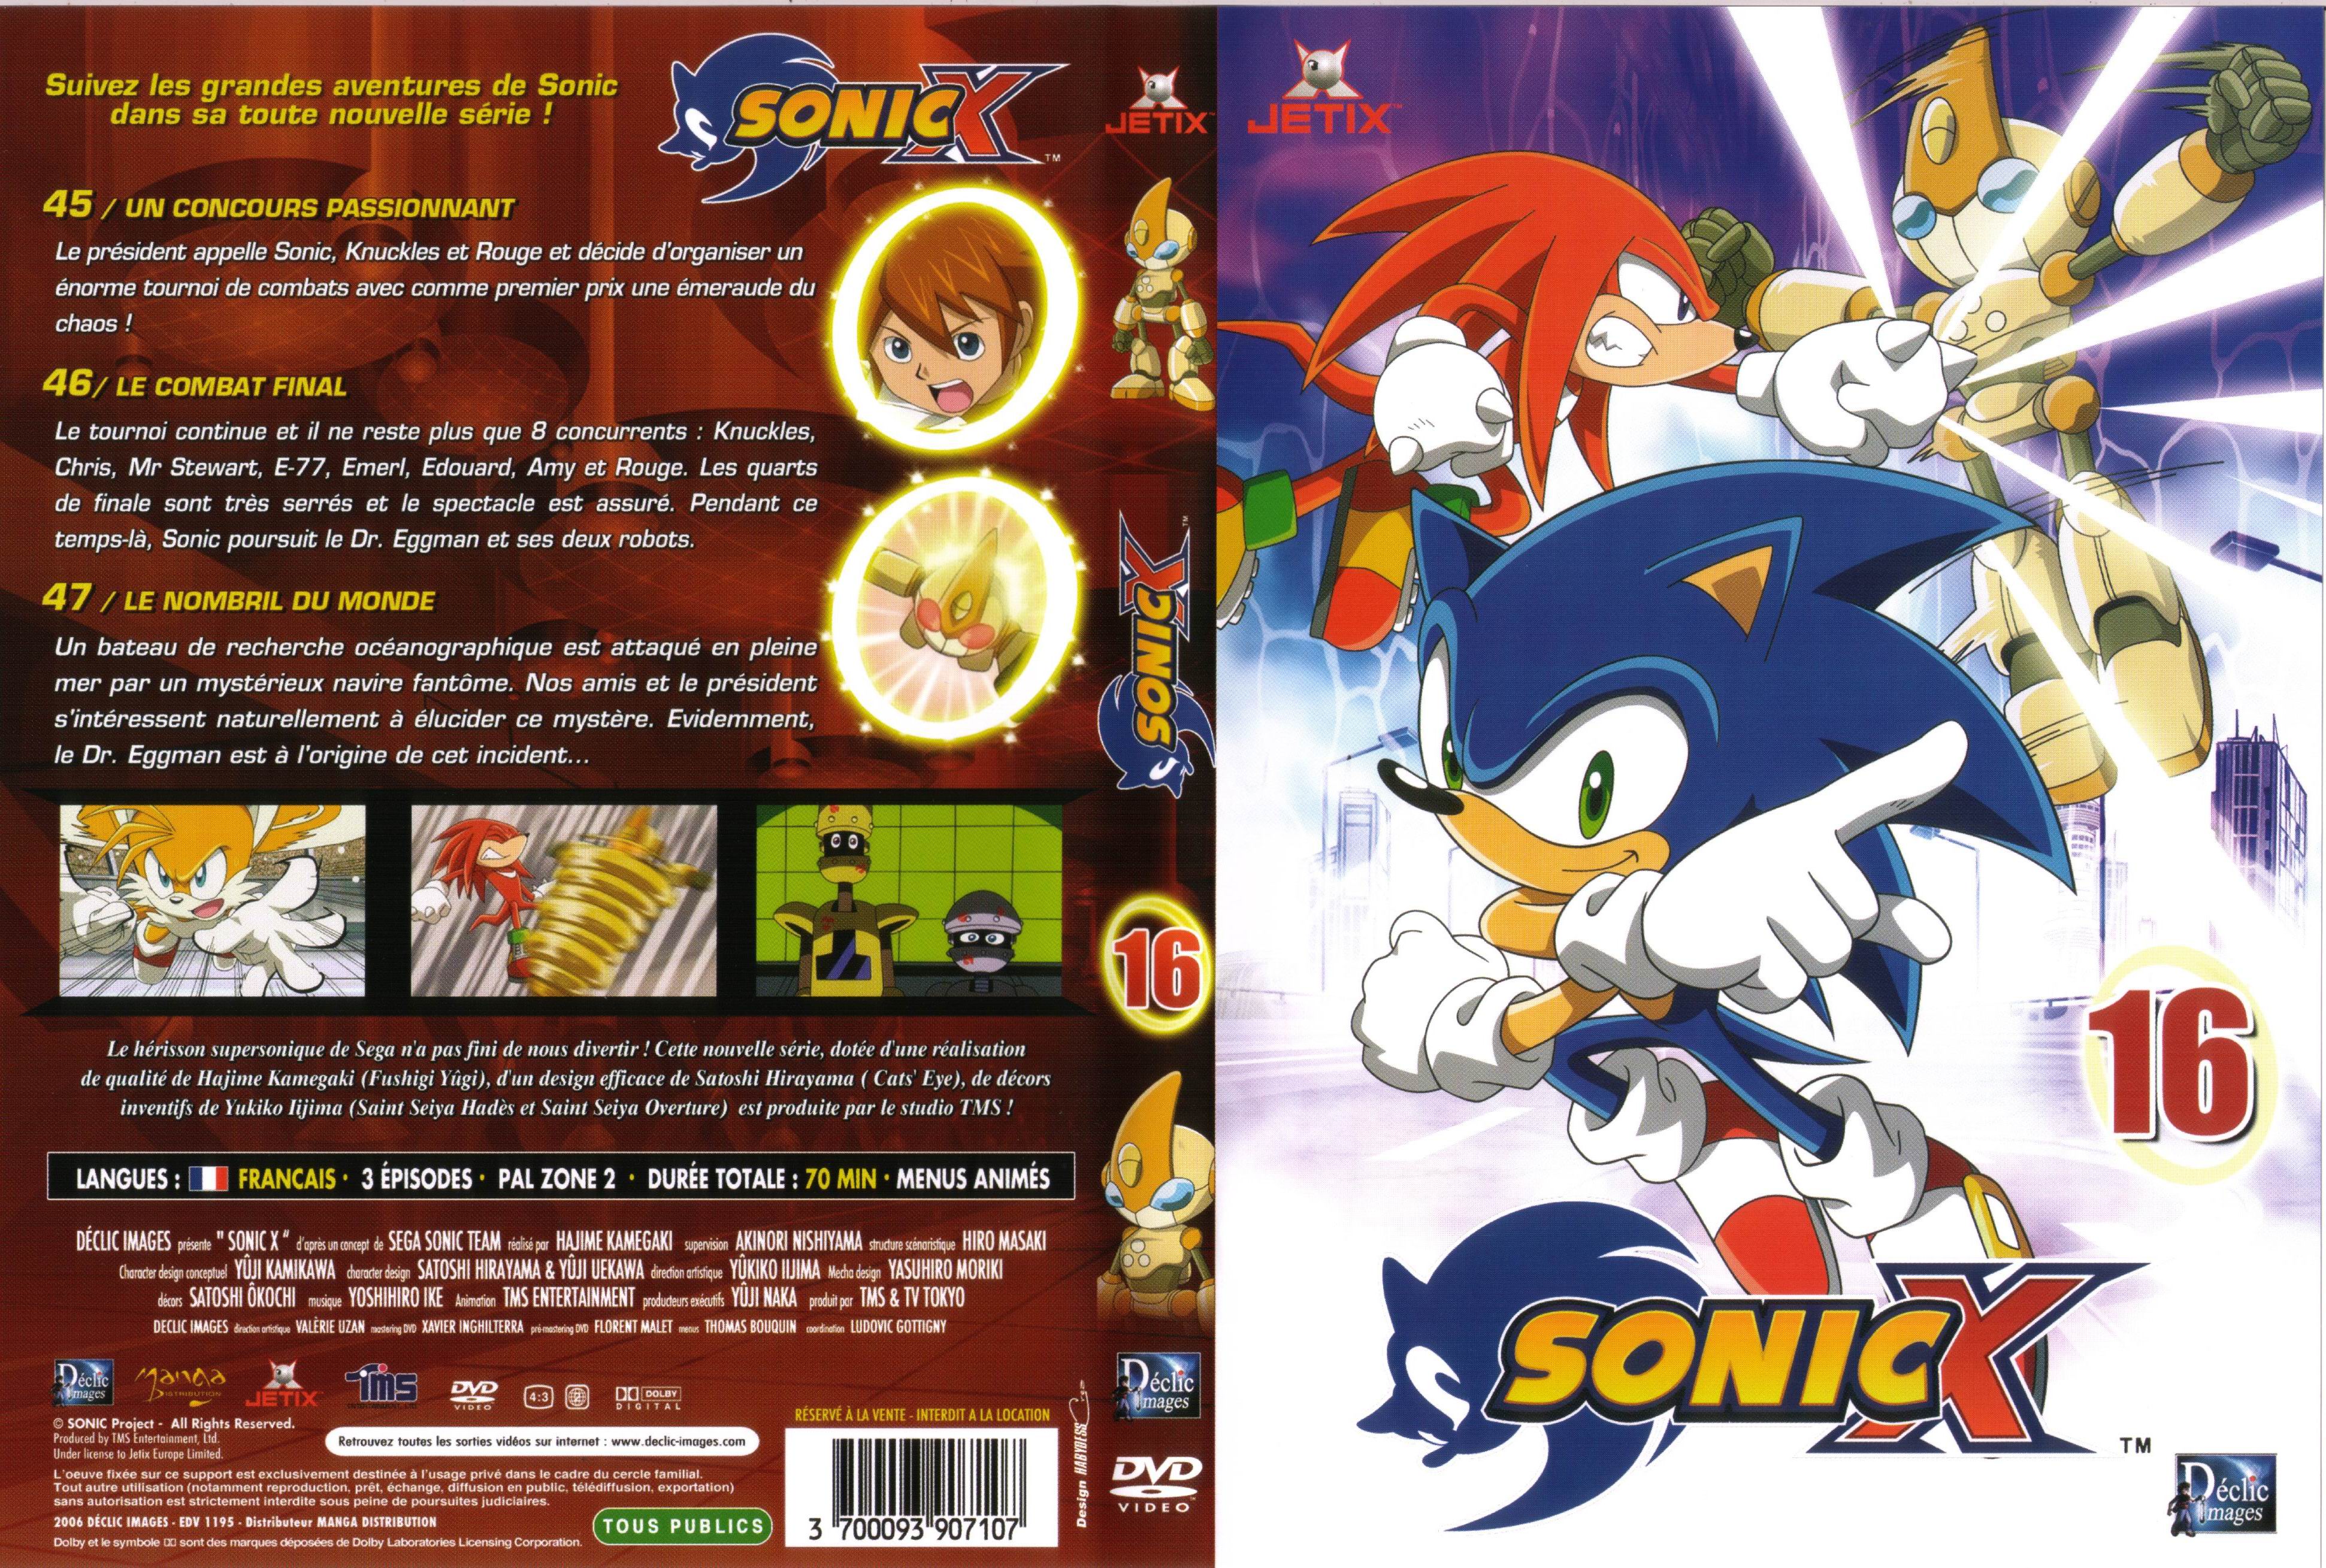 Jaquette DVD Sonic X vol 16.